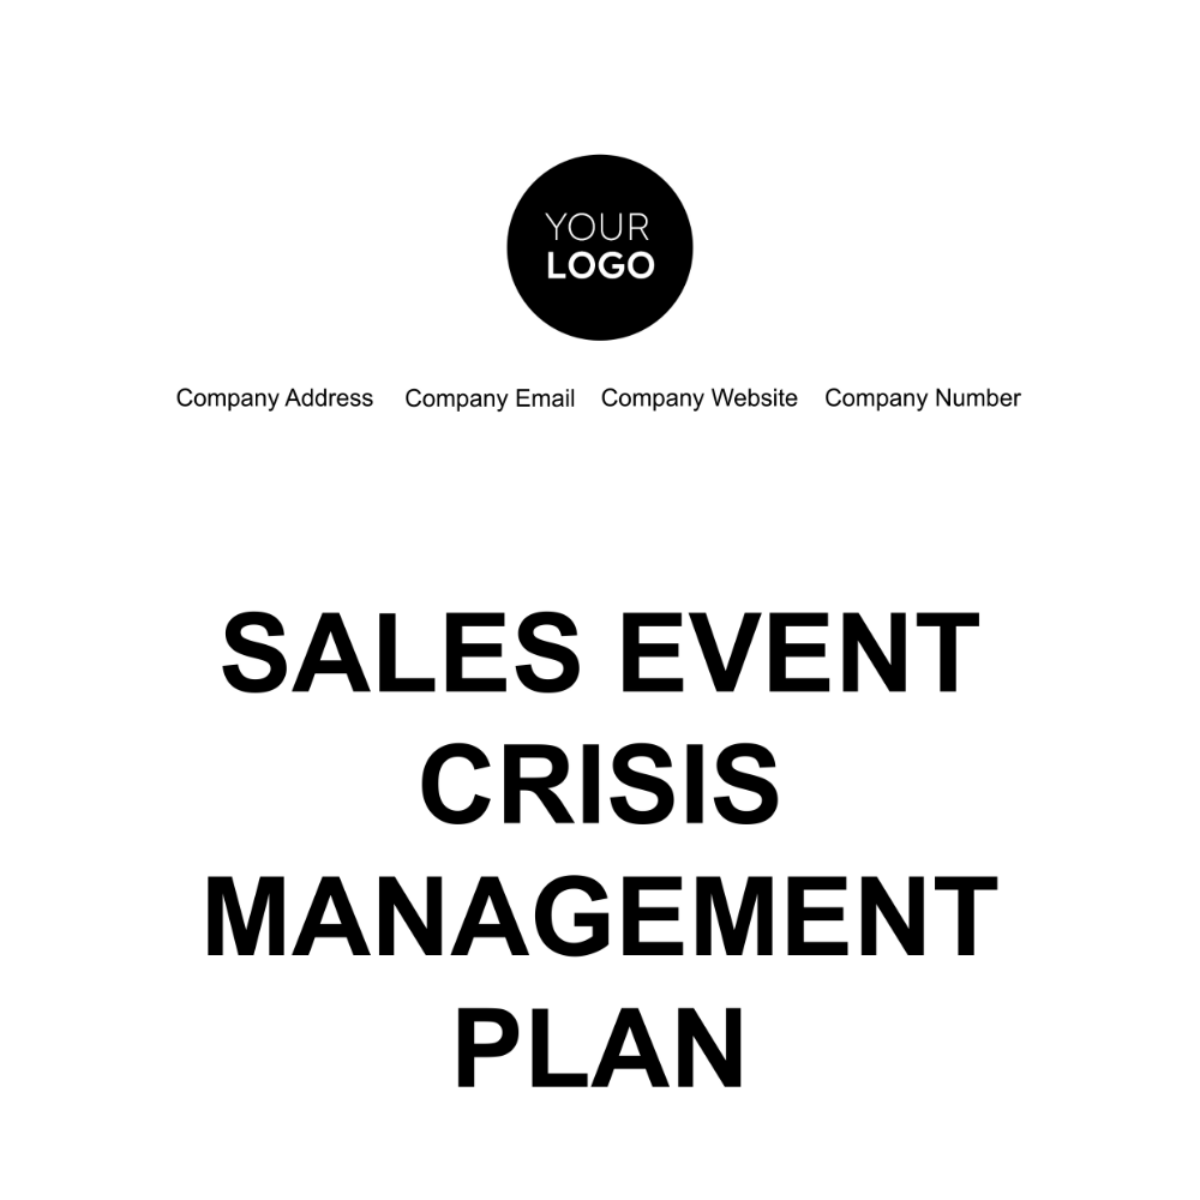 Free Sales Event Crisis Management Plan Template